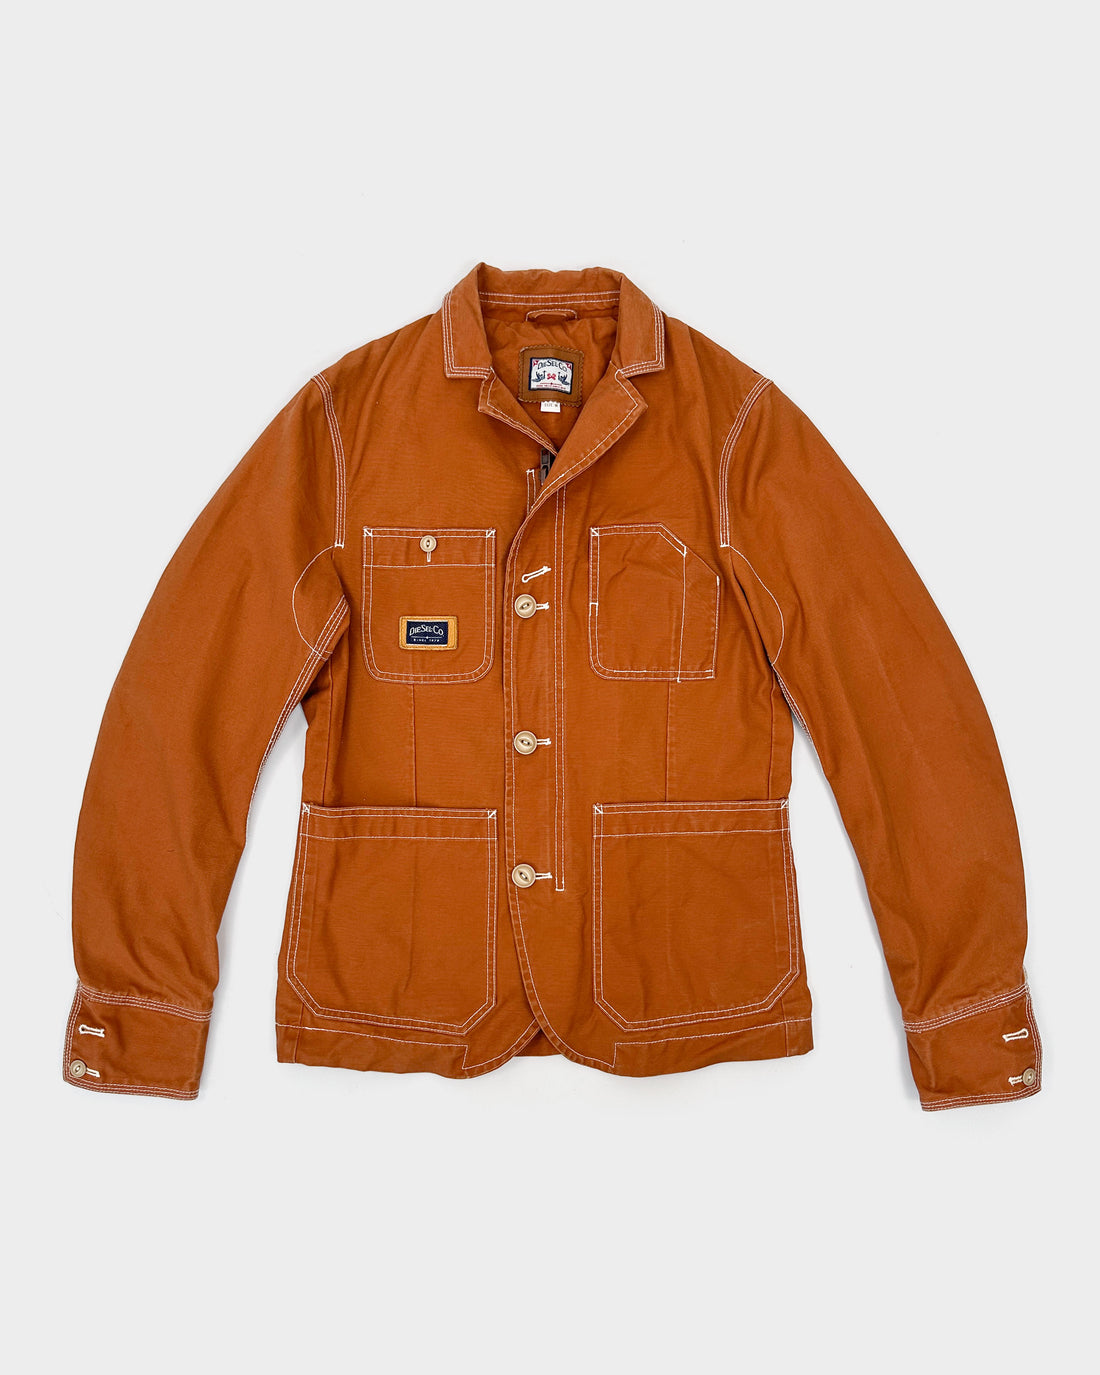 Diesel Orange WorkWear Jacket 1990's